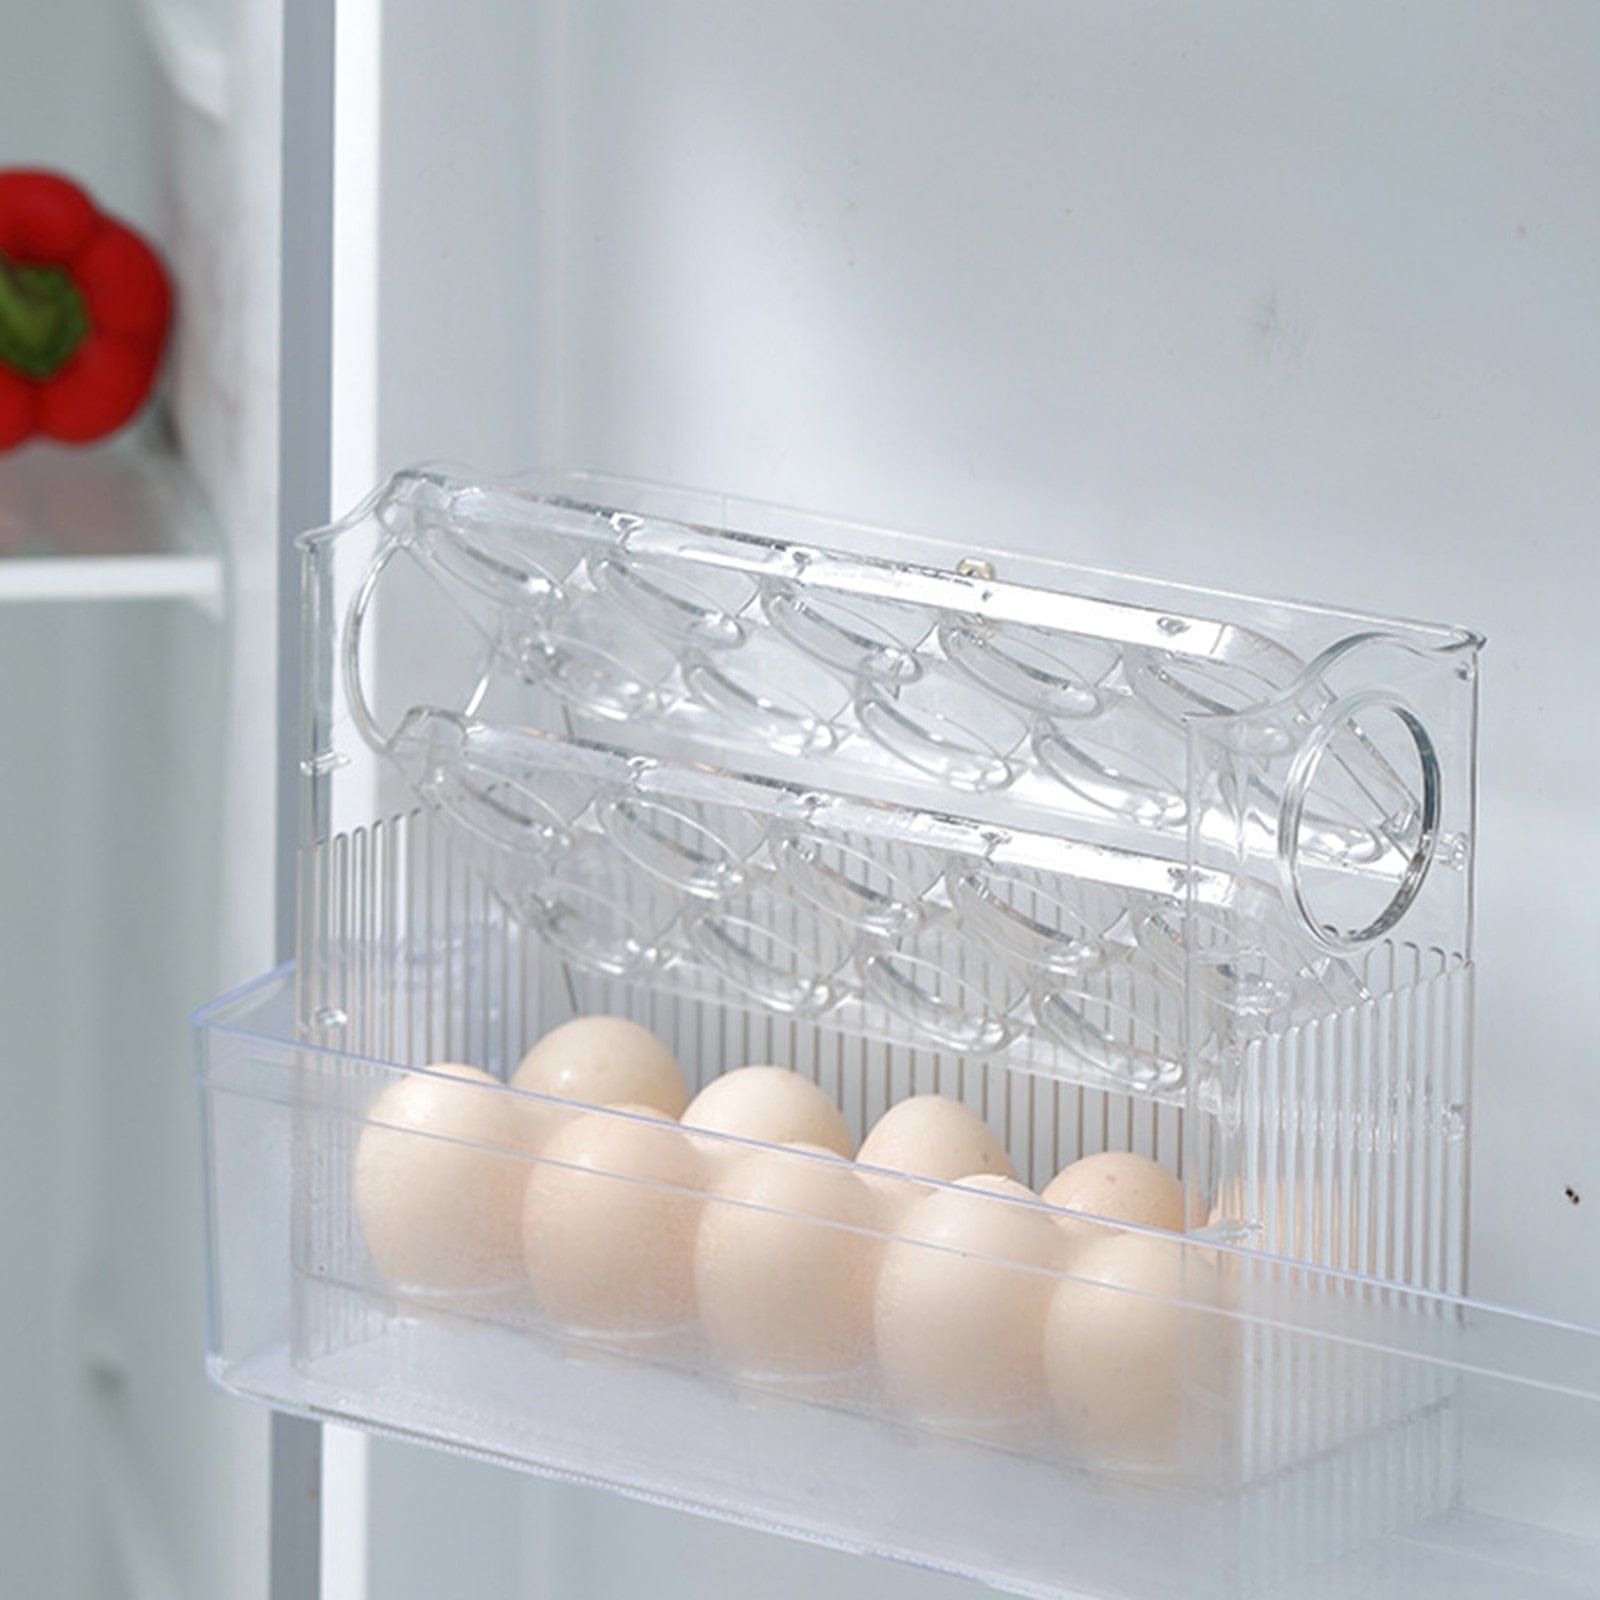 3 Layer 30 Kitchen Egg Storage Box Holder Refrigerator Plastic Egg Tray  Transport Box Organizer for Fridge Container Portable